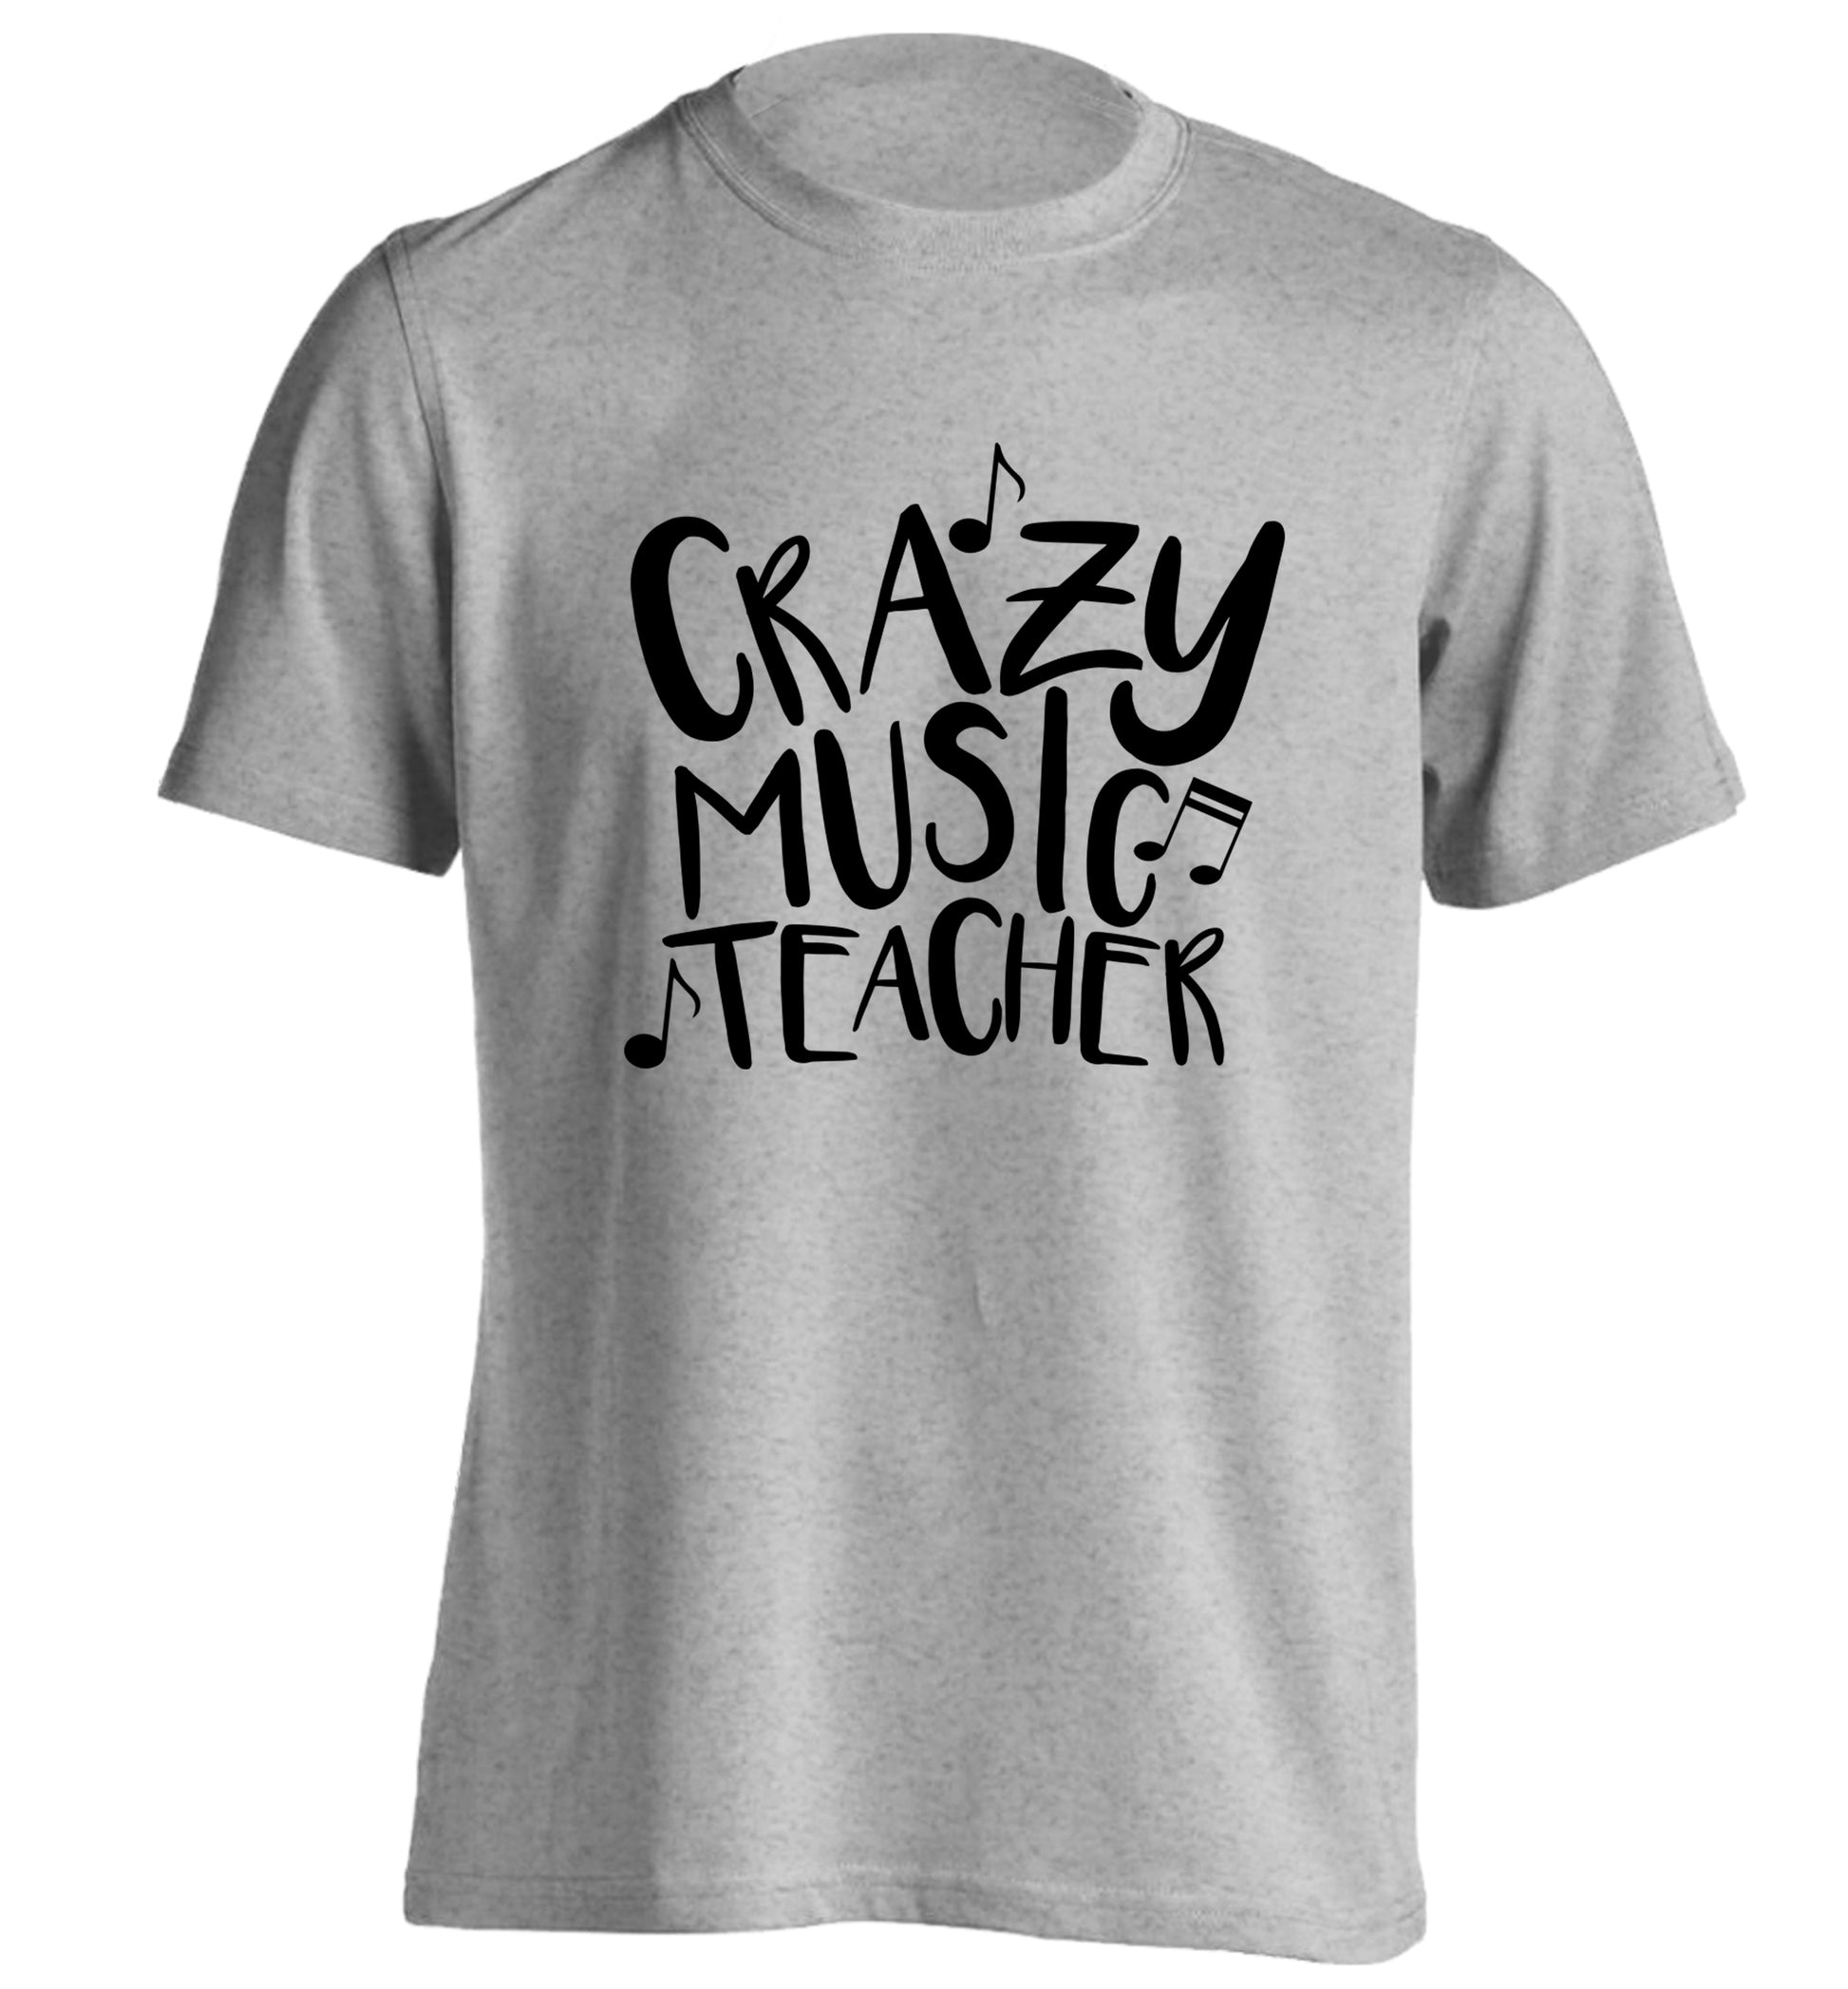 Crazy music teacher adults unisex grey Tshirt 2XL